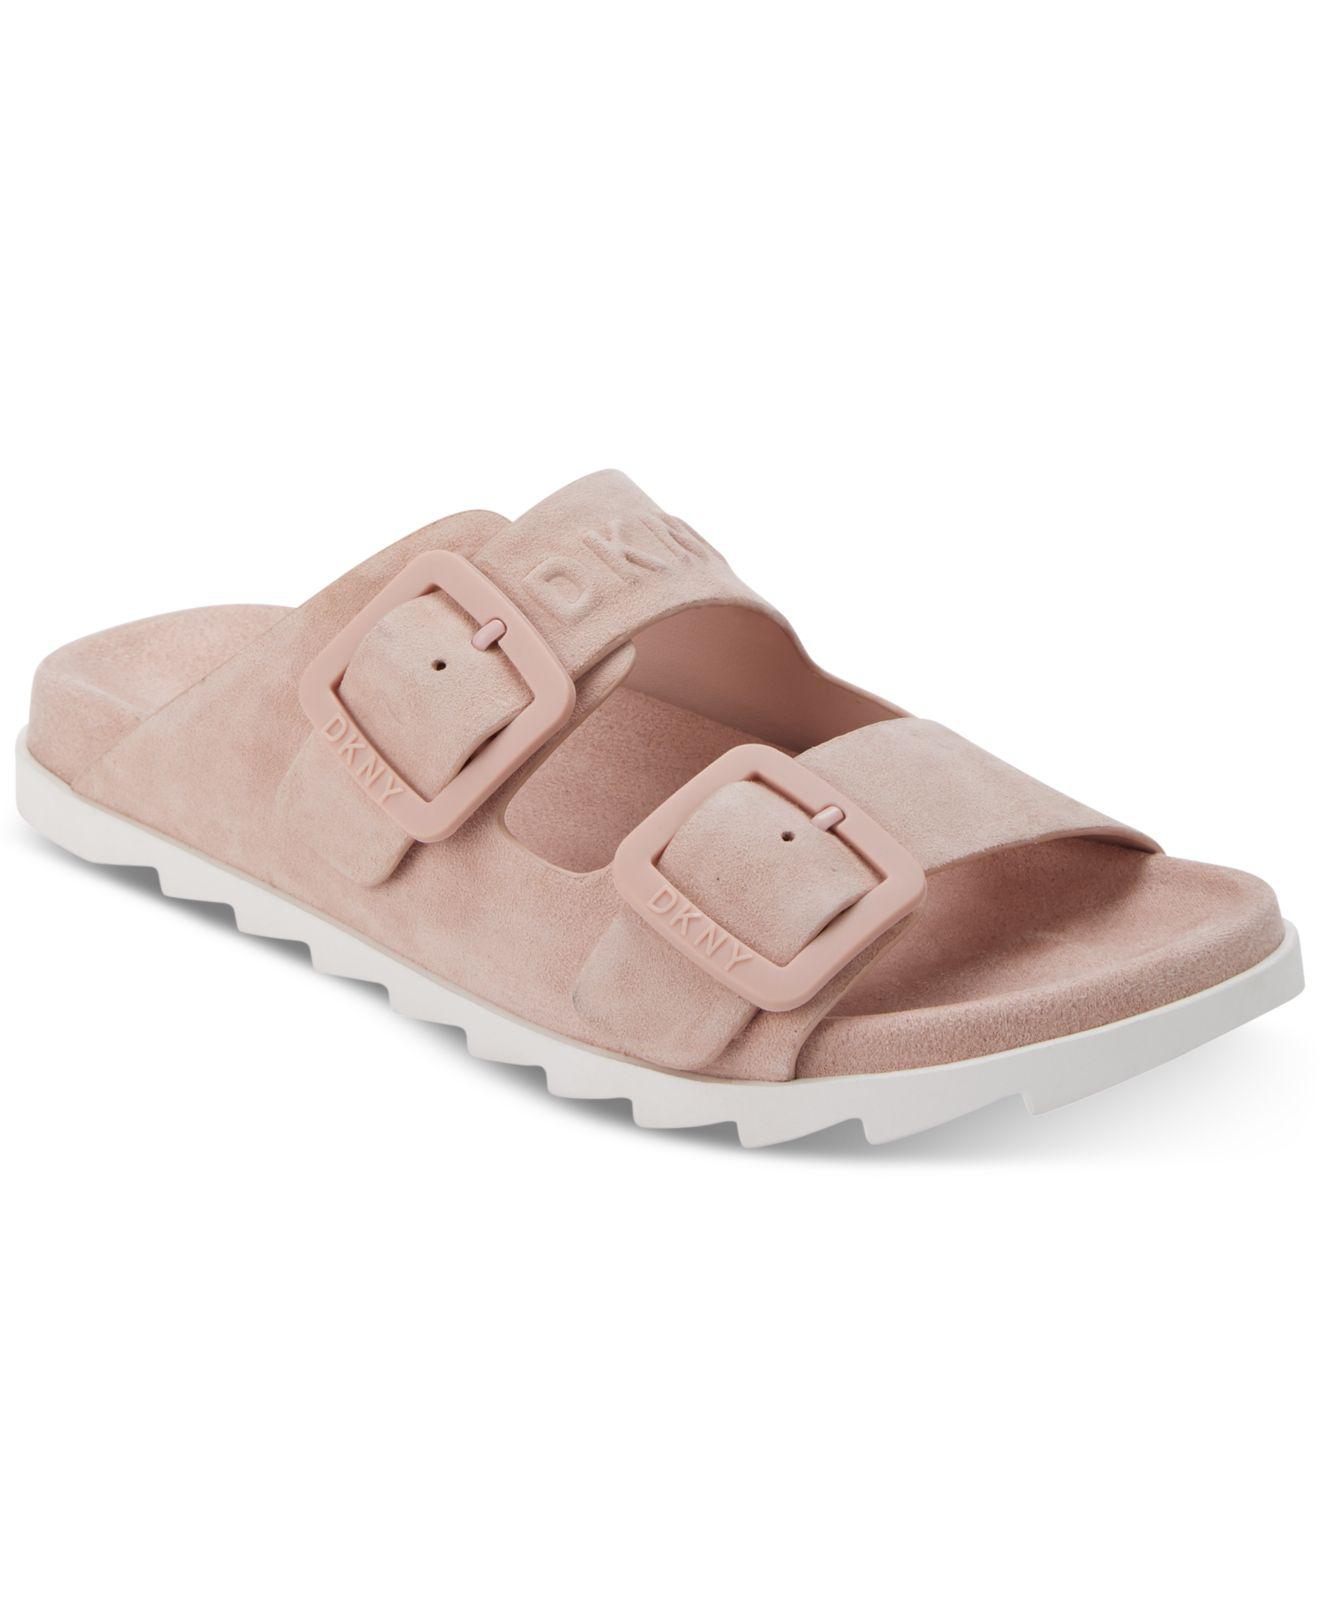 dkny maya flat sandals